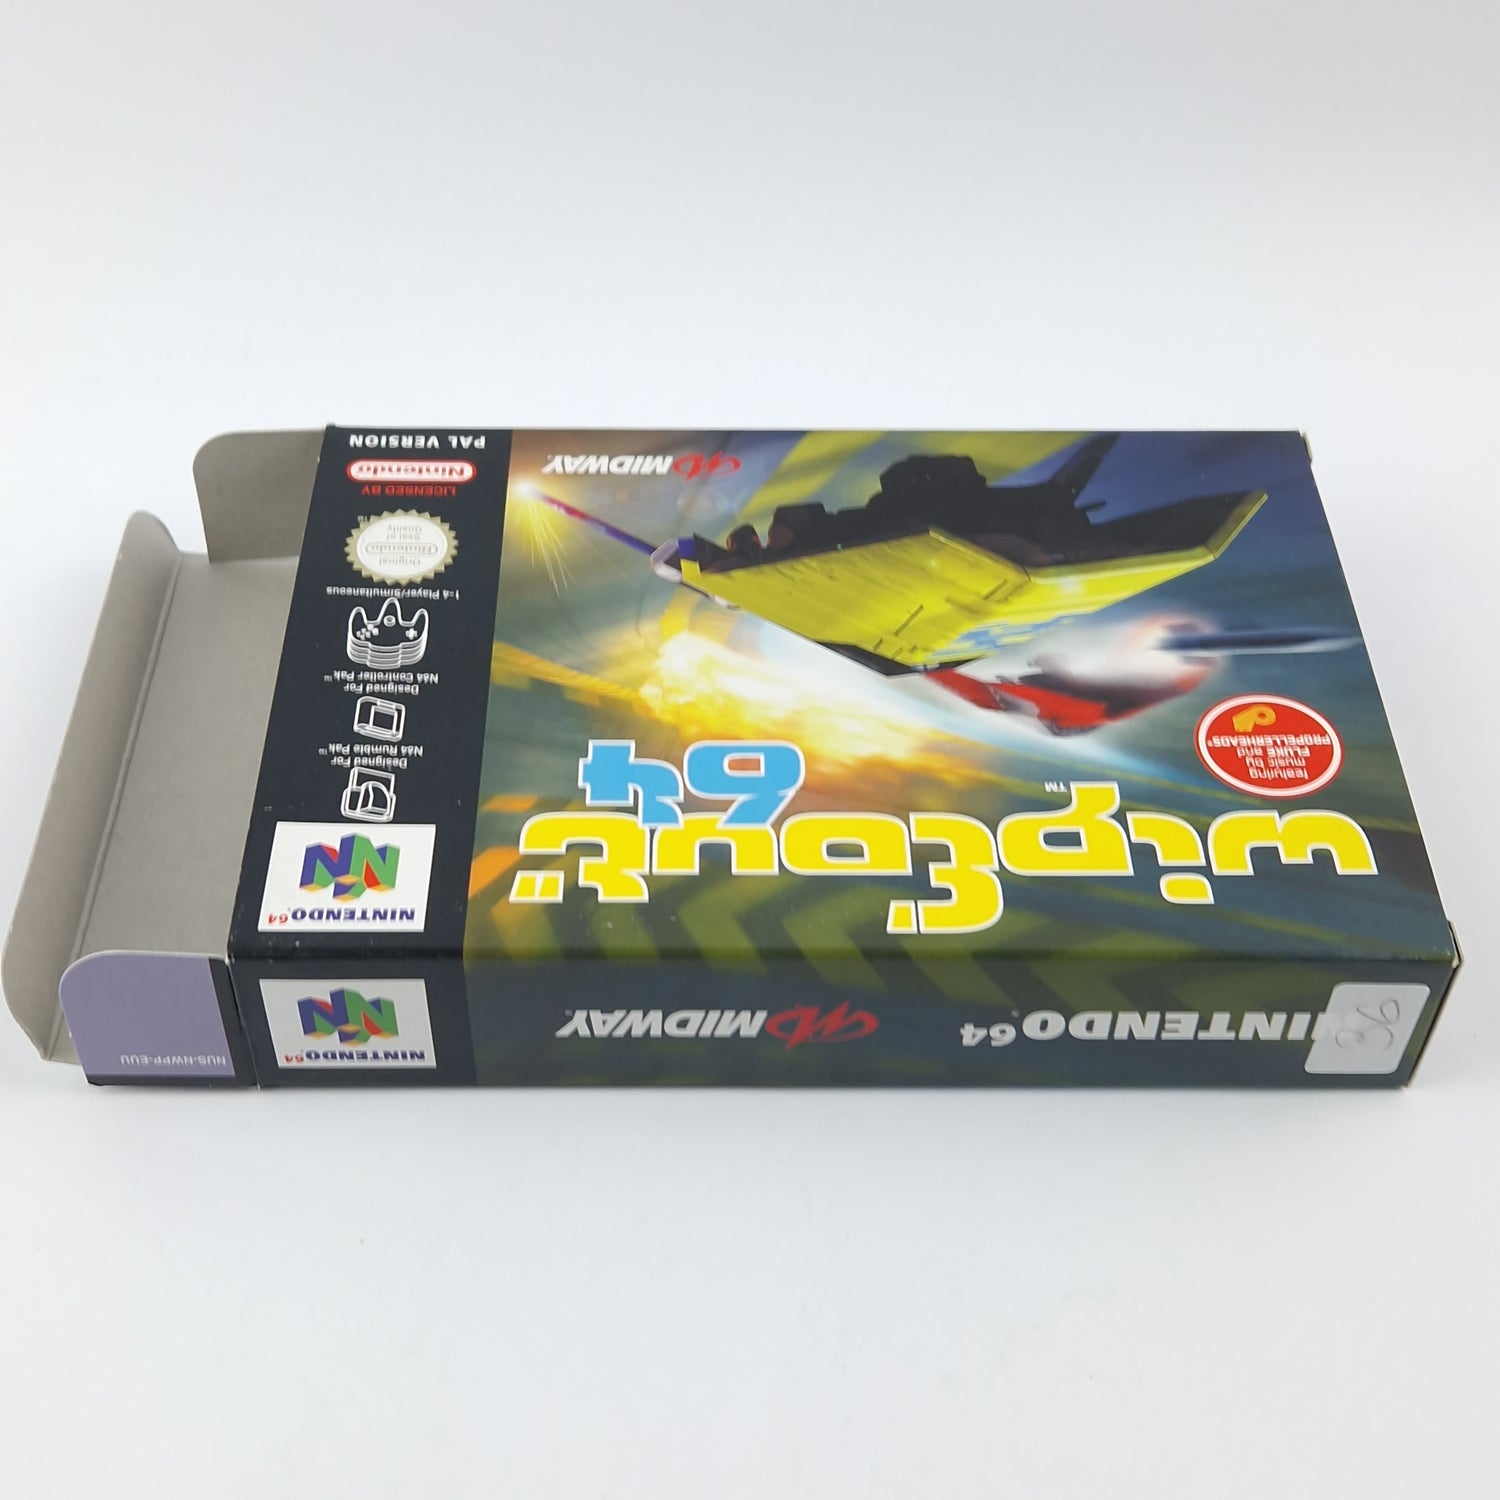 Nintendo 64 Game: Wipeout 64 - Module Instructions OVP cib / N64 PAL